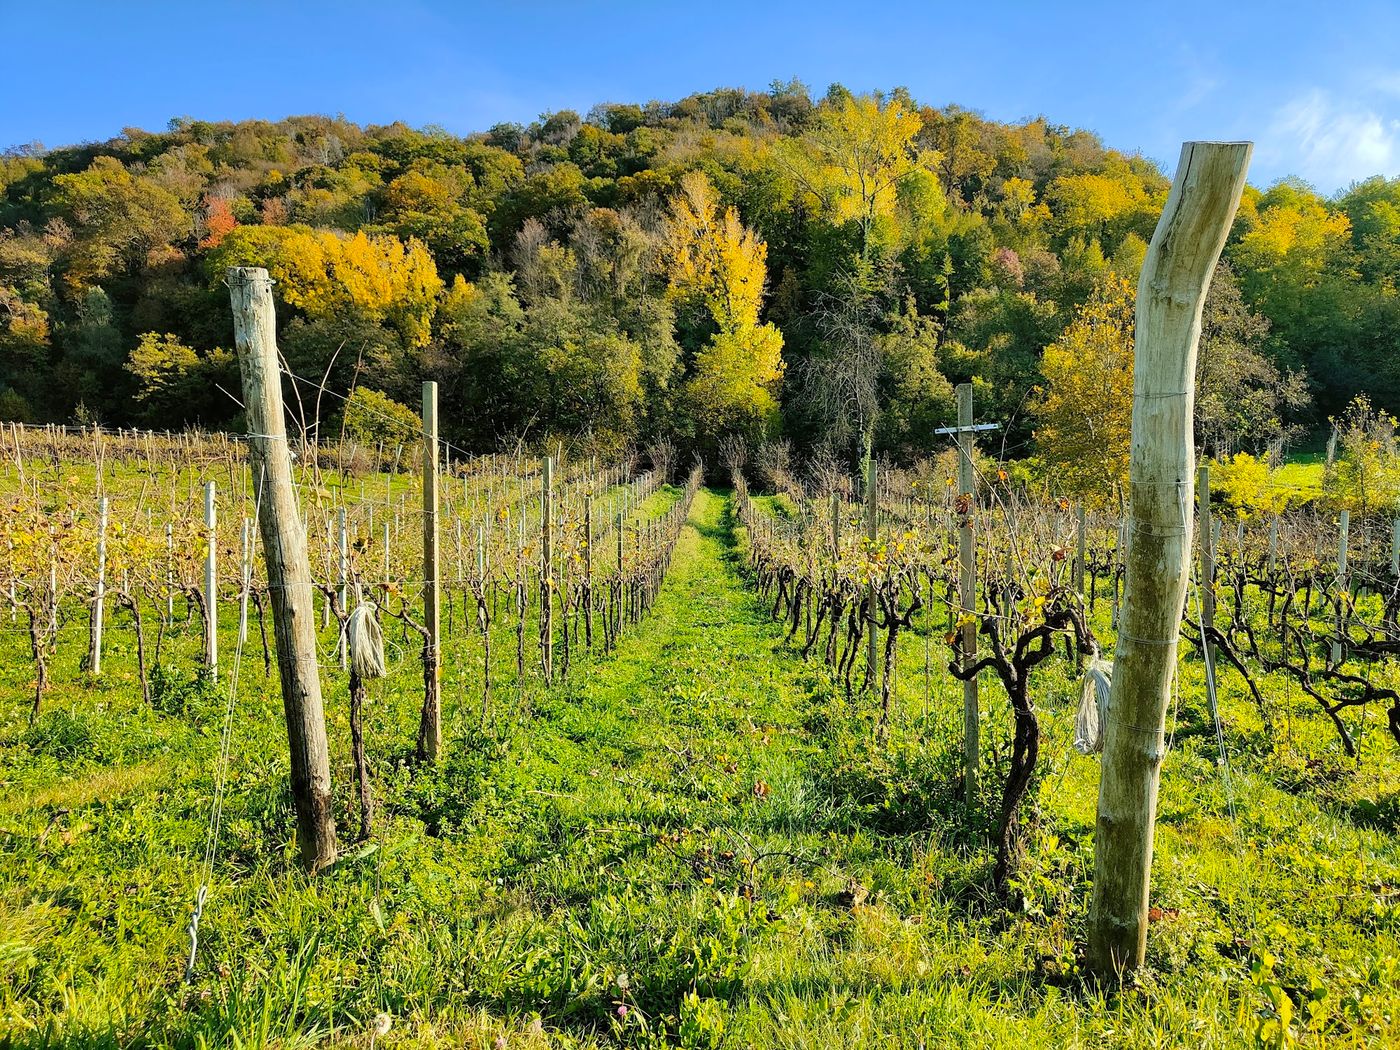 Weinprobe in den Prosecco Hügeln